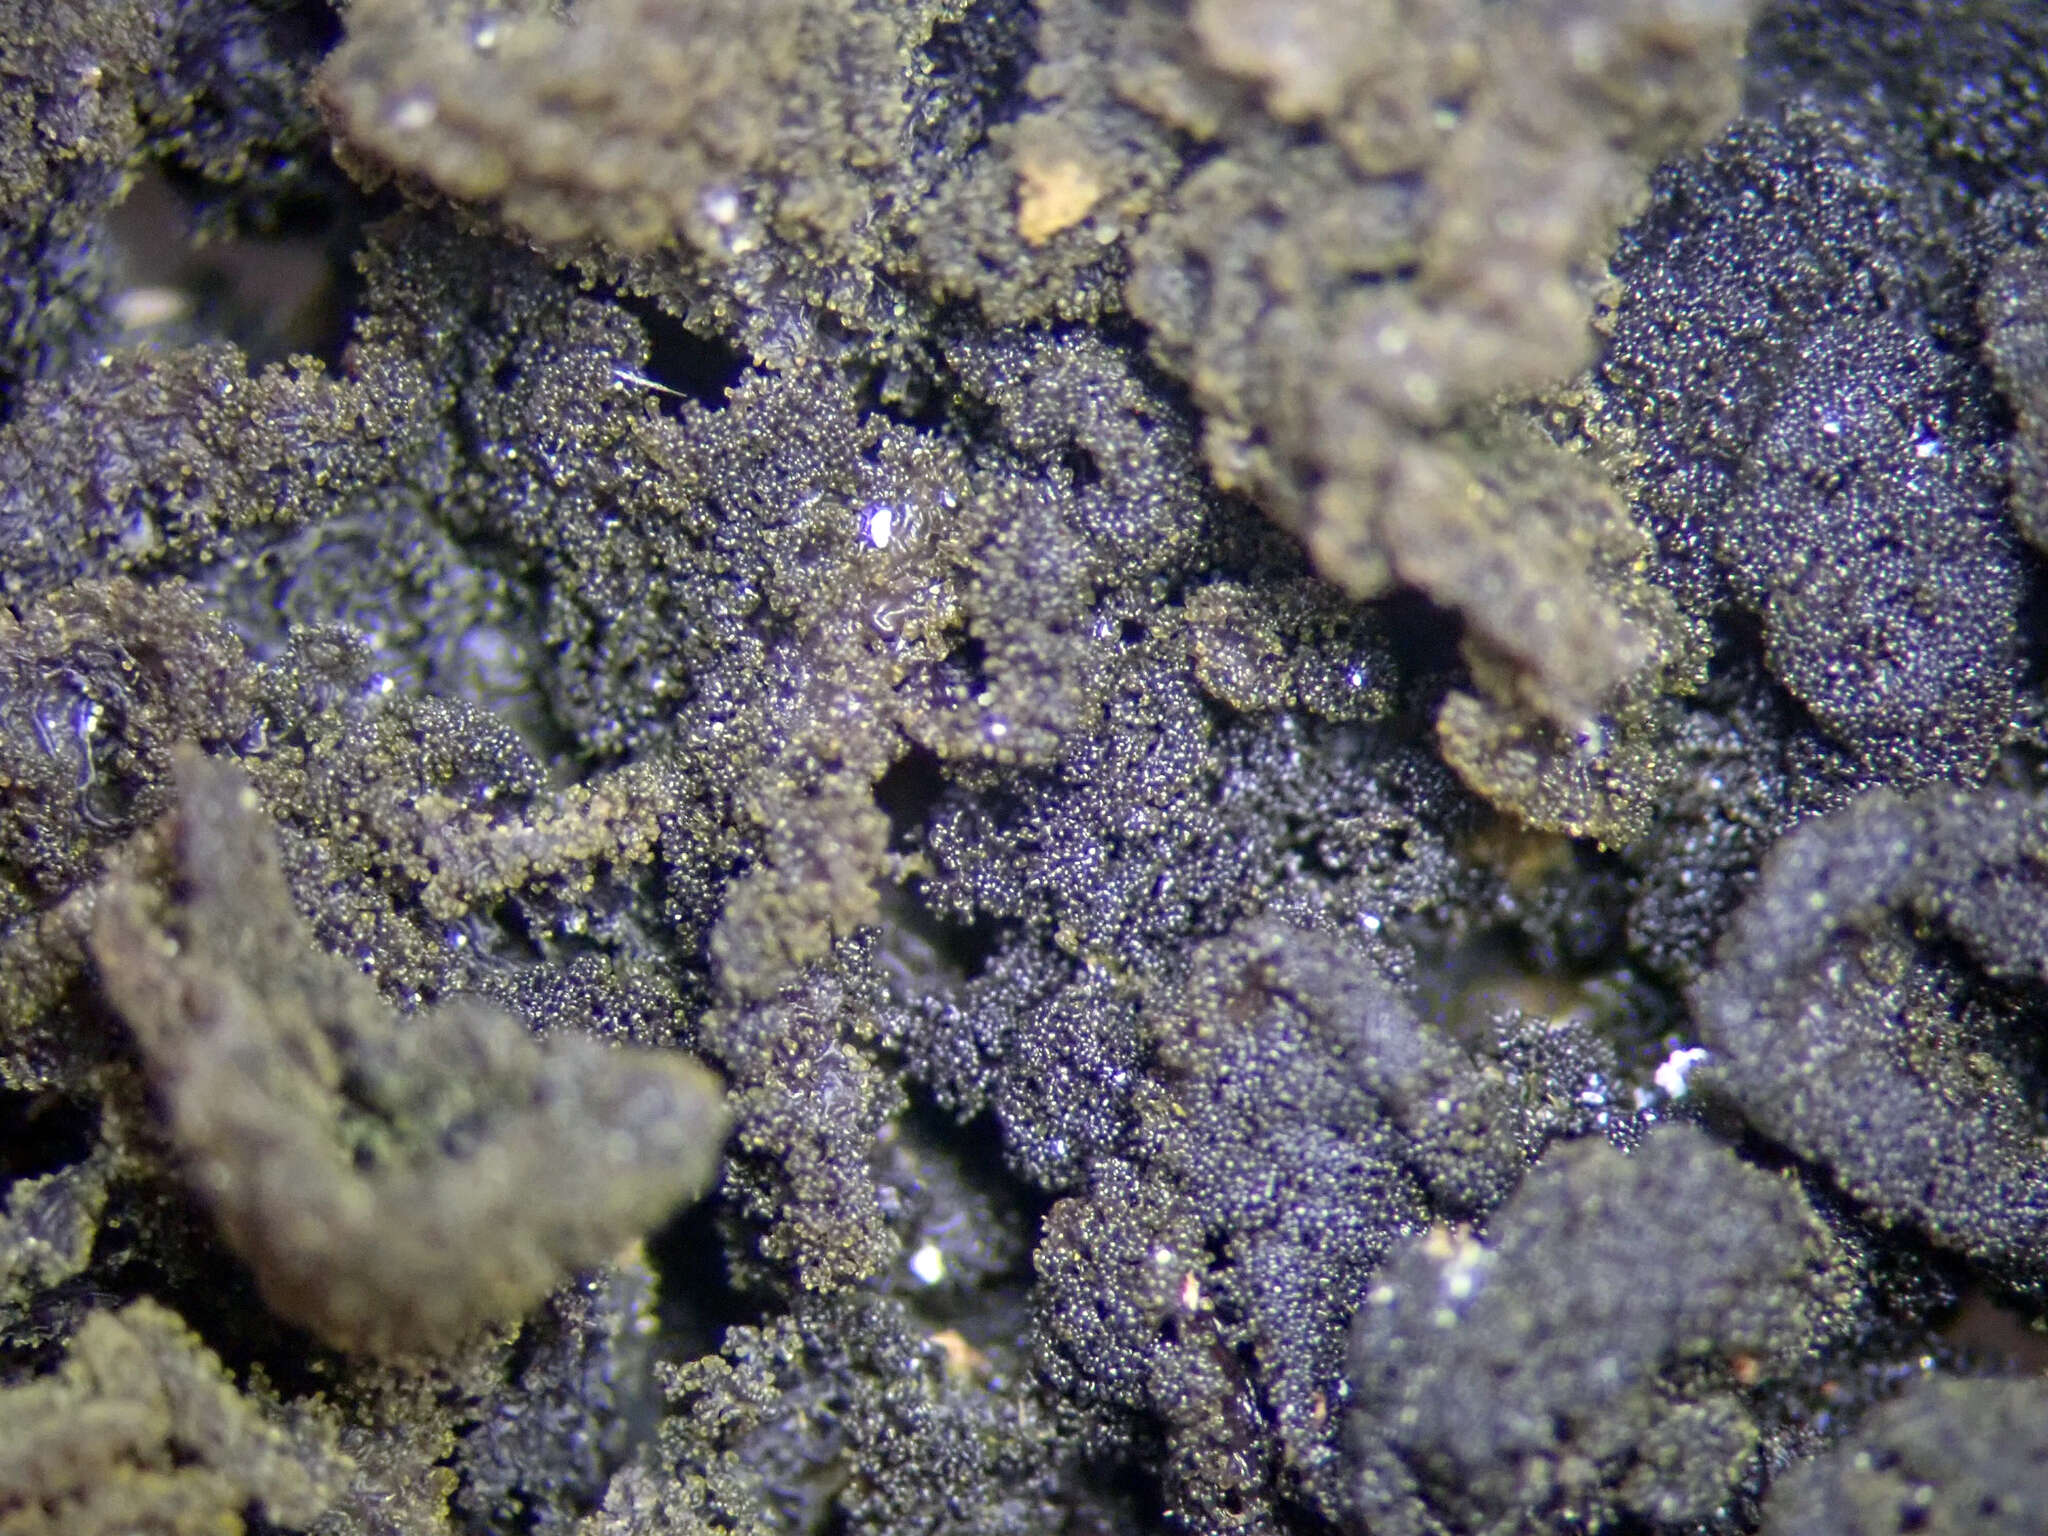 Image of Leptogium coralloideum (Meyen & Flot.) Vain.